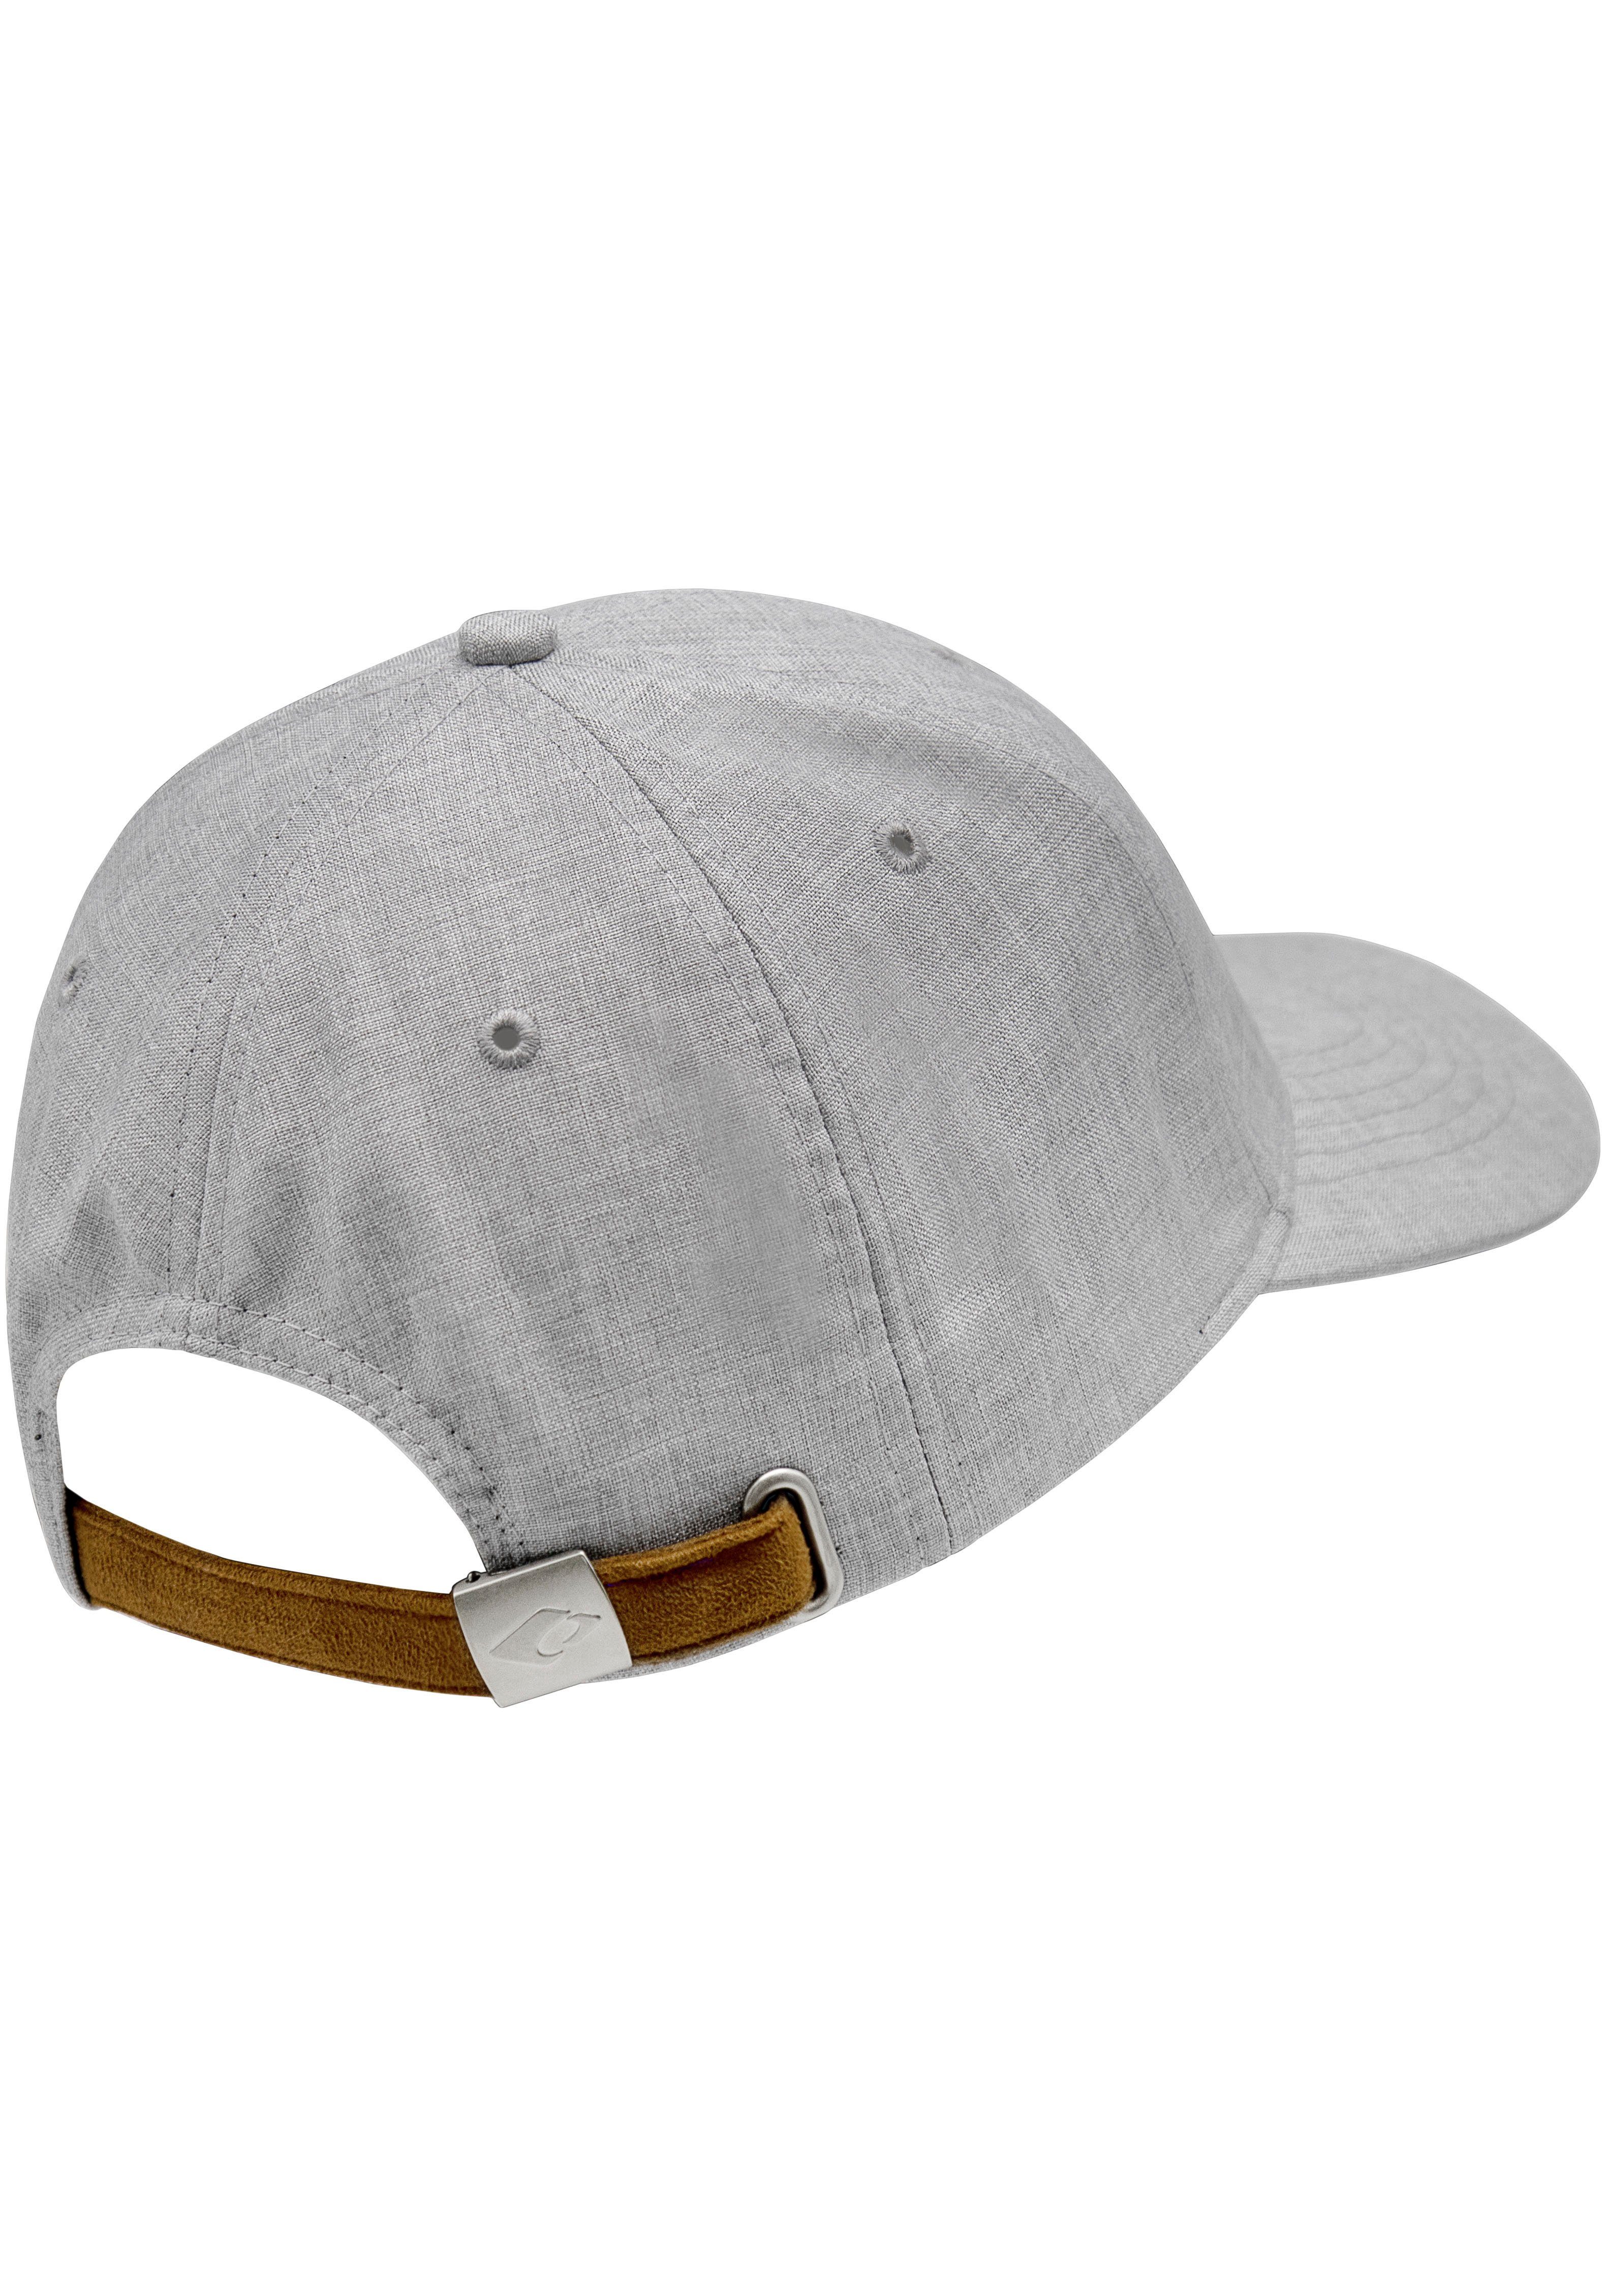 chillouts Baseball Cap Amadora Hat Optik, hellgrau in Size, melierter verstellbar One